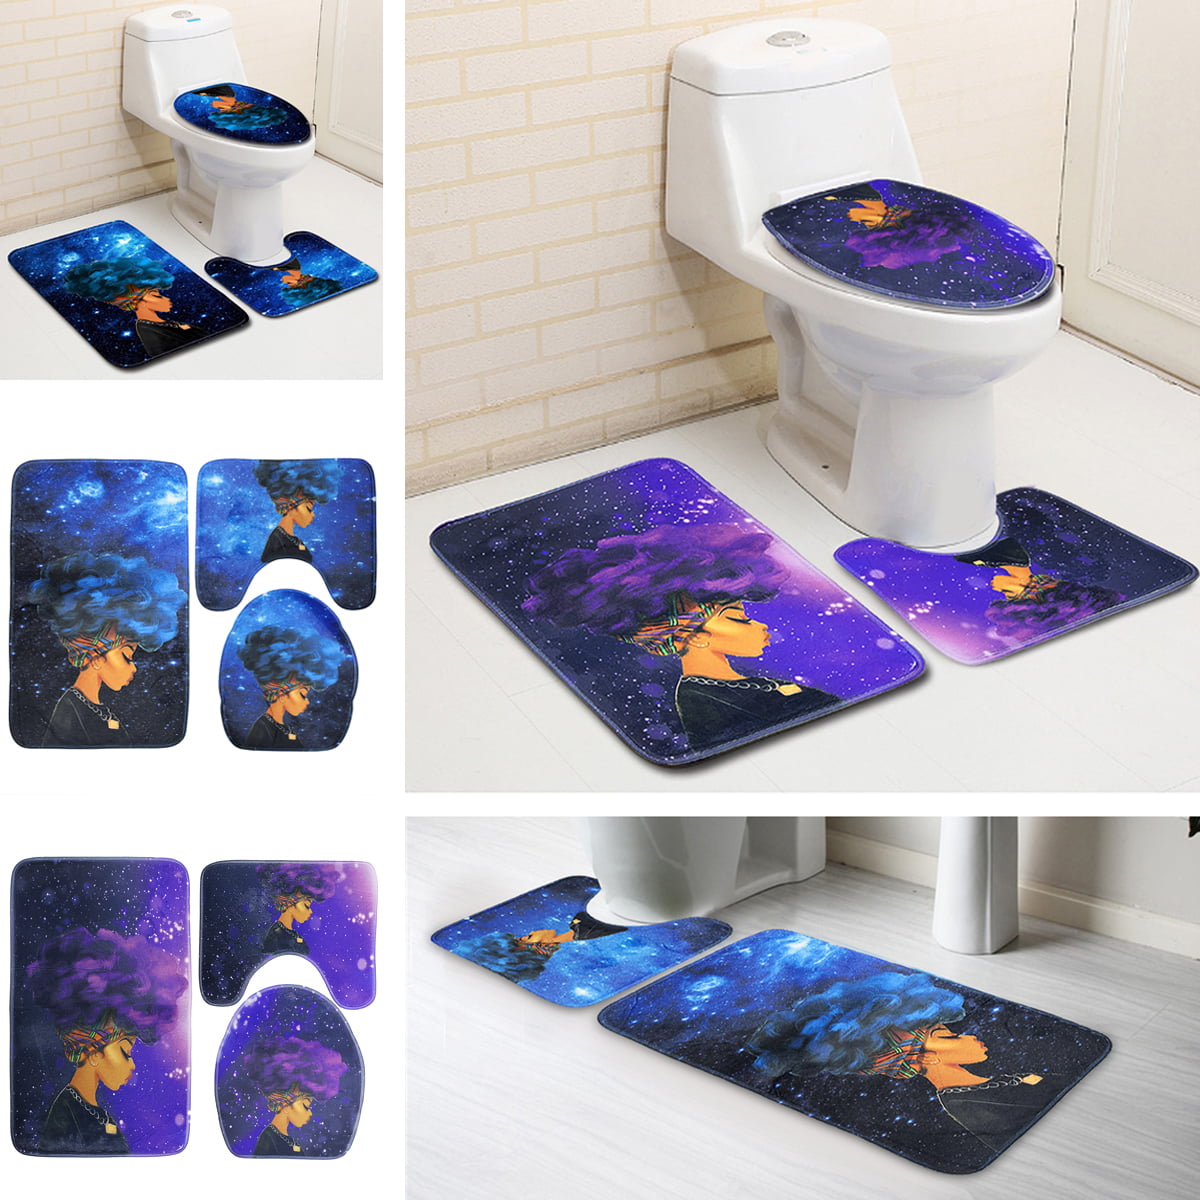 3x Non-Slip Bathroom Rug Bath Mat Contour Toilet Seat Lid Cover Set Home Decor A 